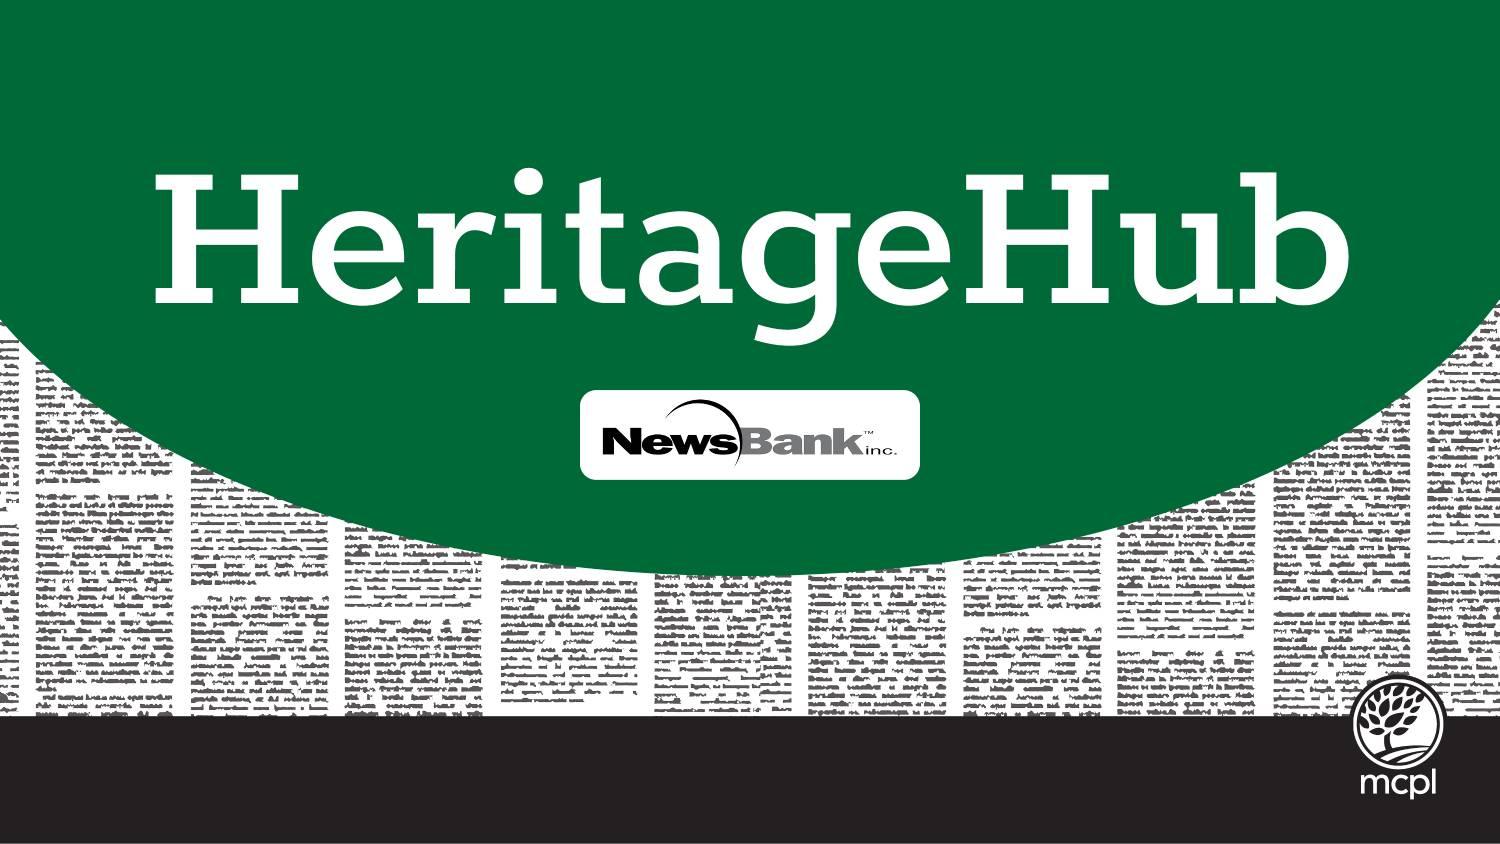 eResource of the Month: HeritageHub